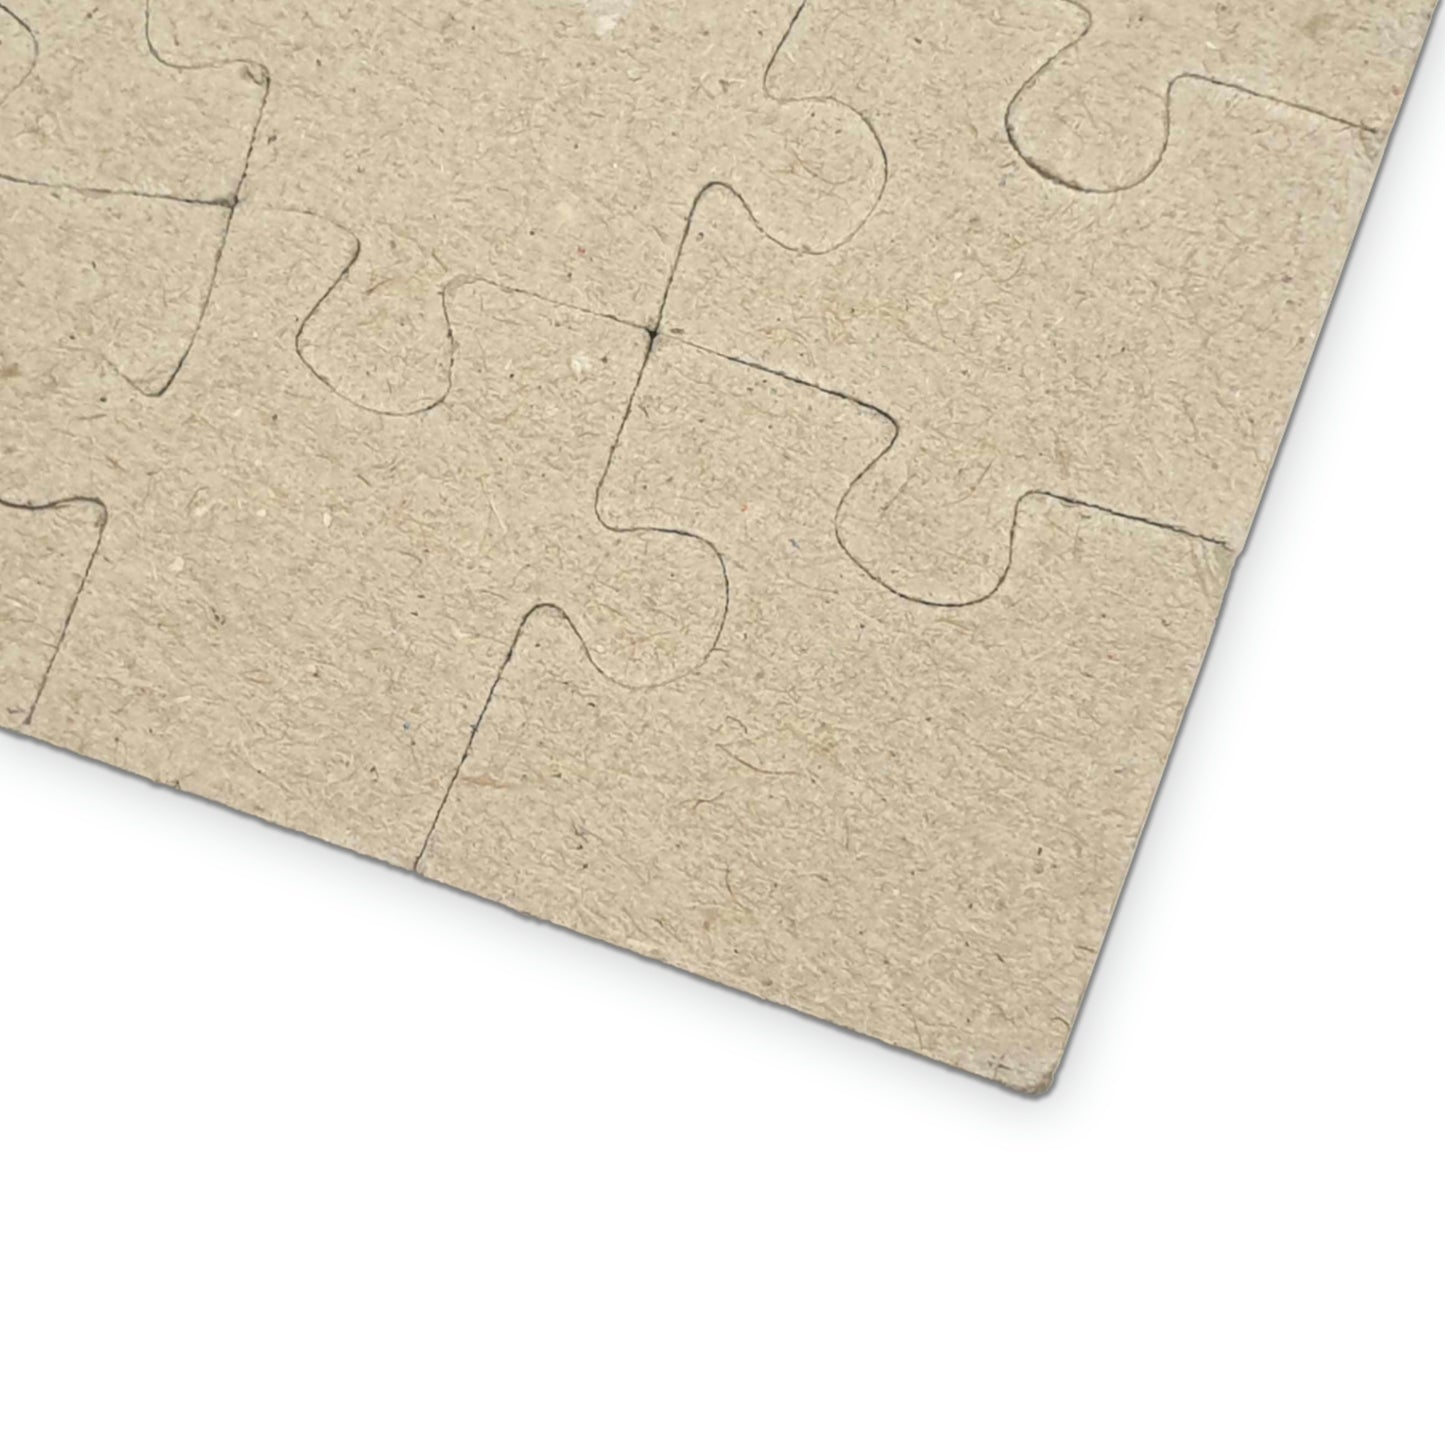 The Ka - 1000 Piece Jigsaw Puzzle